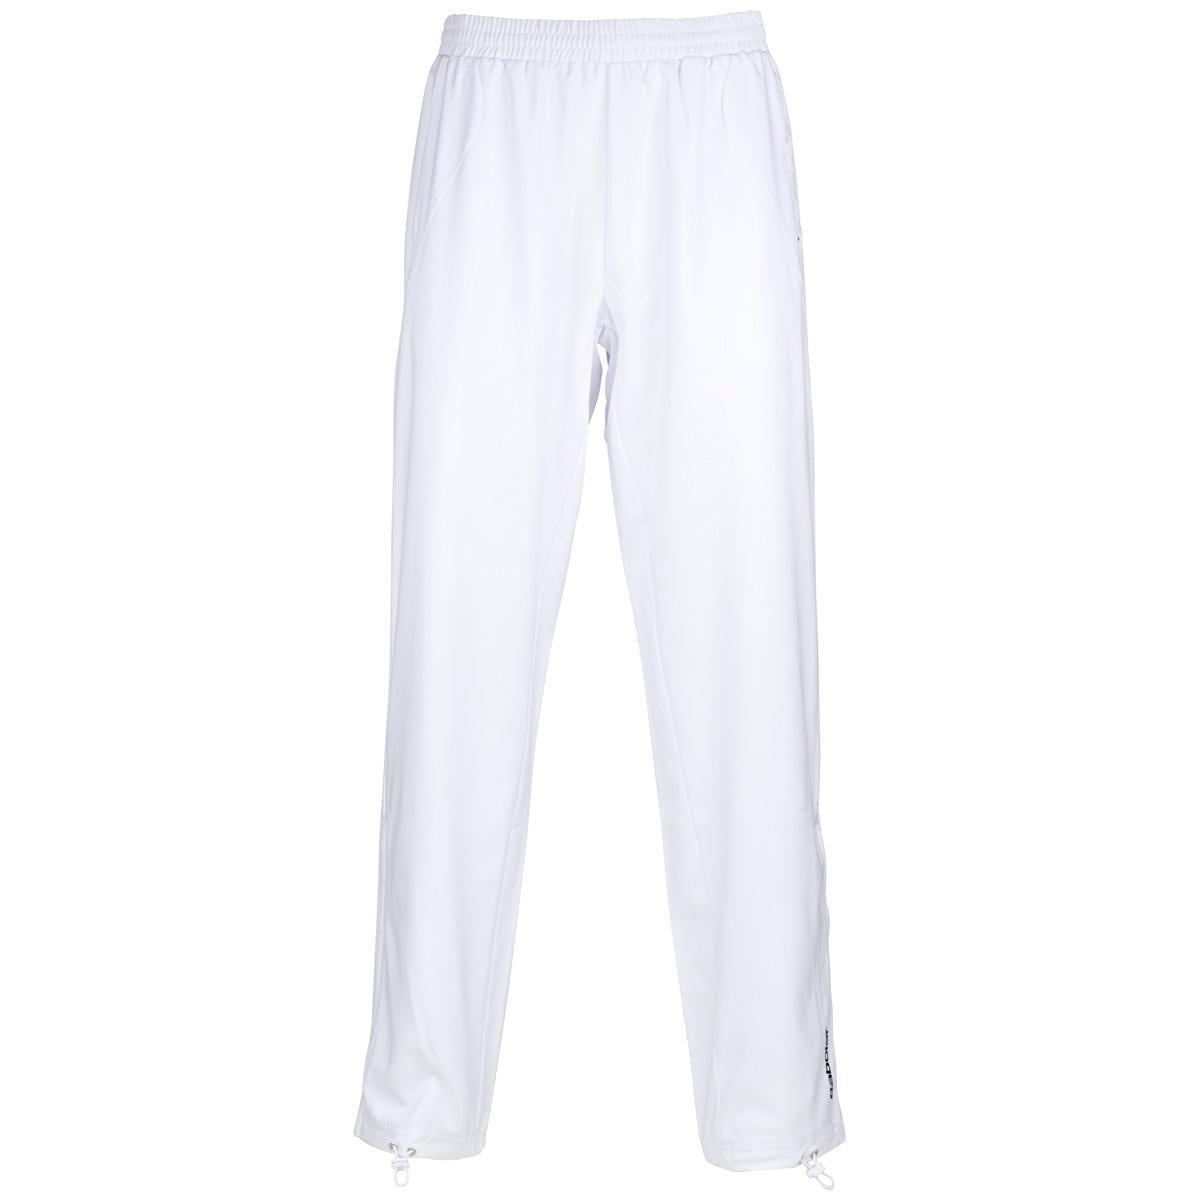 Babolat Mens Match Core Pants (White)